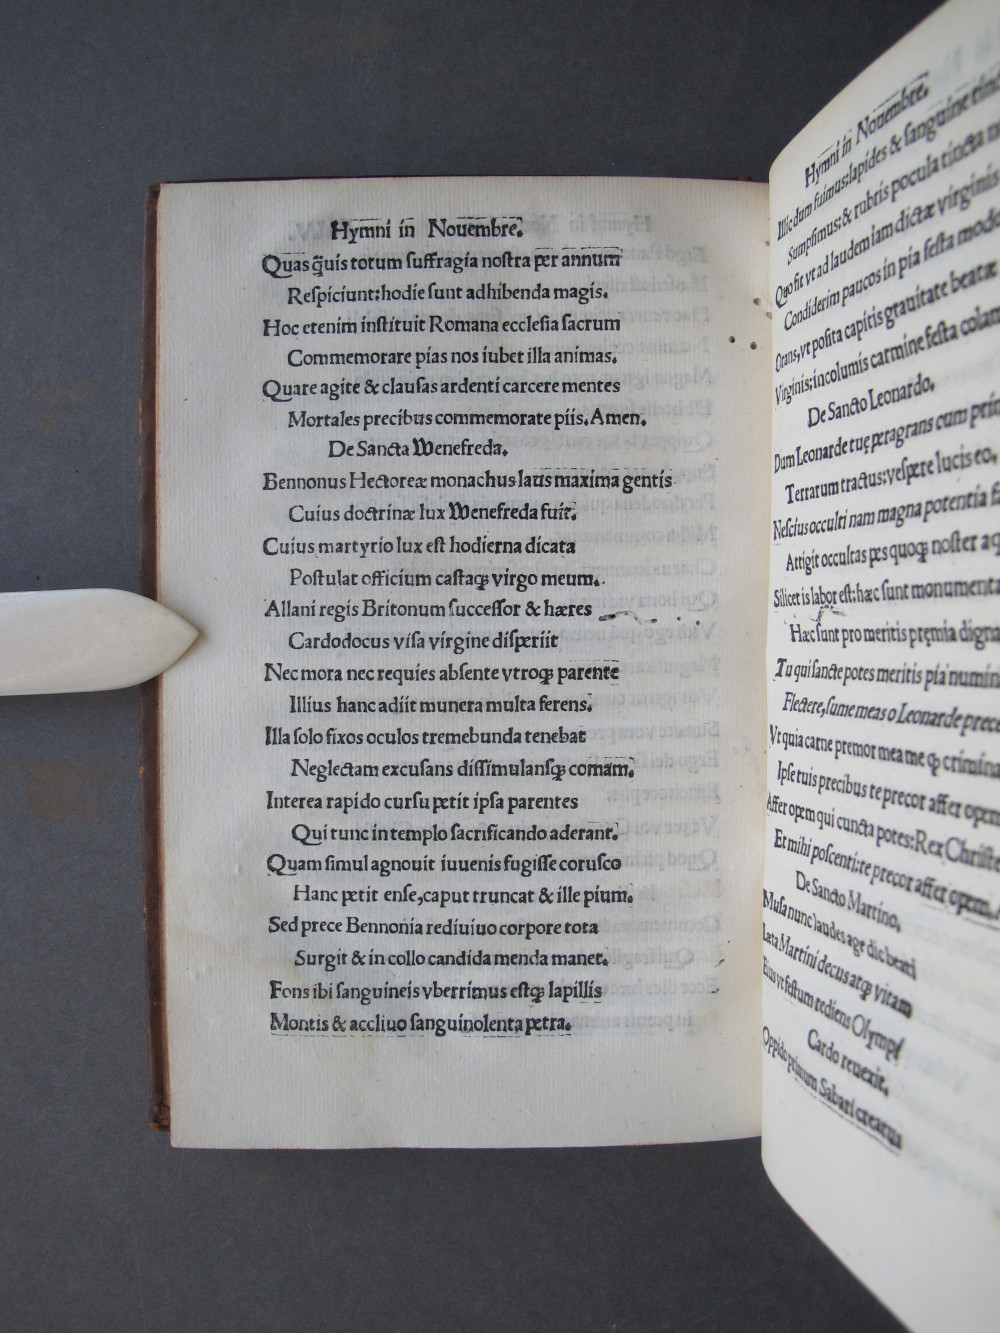 Folio 55 verso